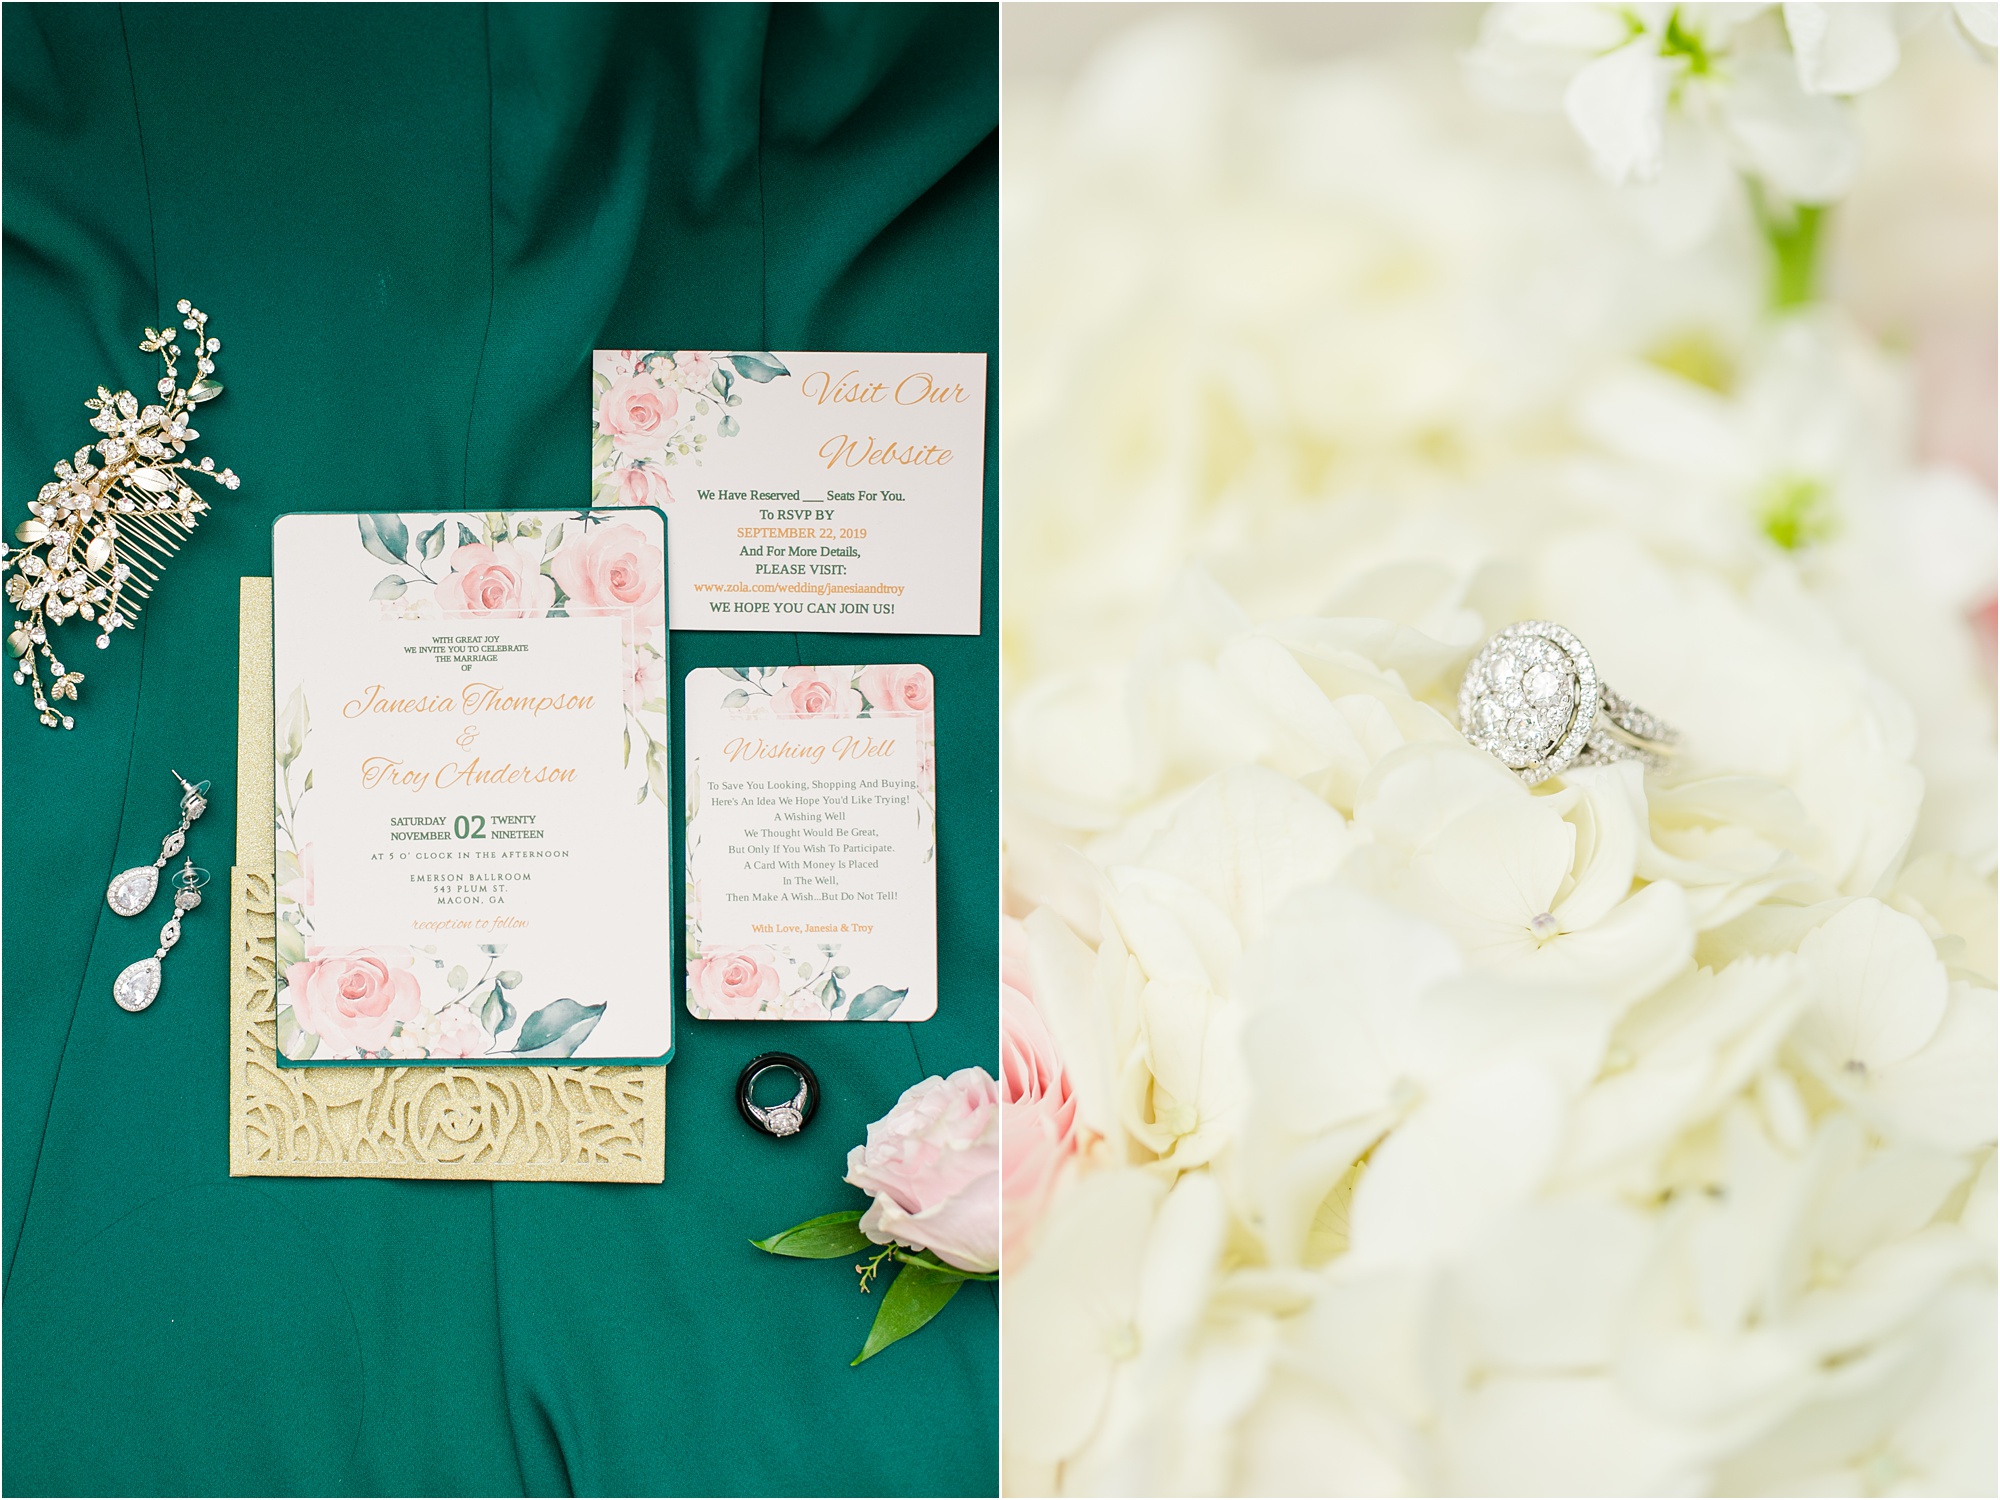 macon georgia wedding photographer gold emerald details